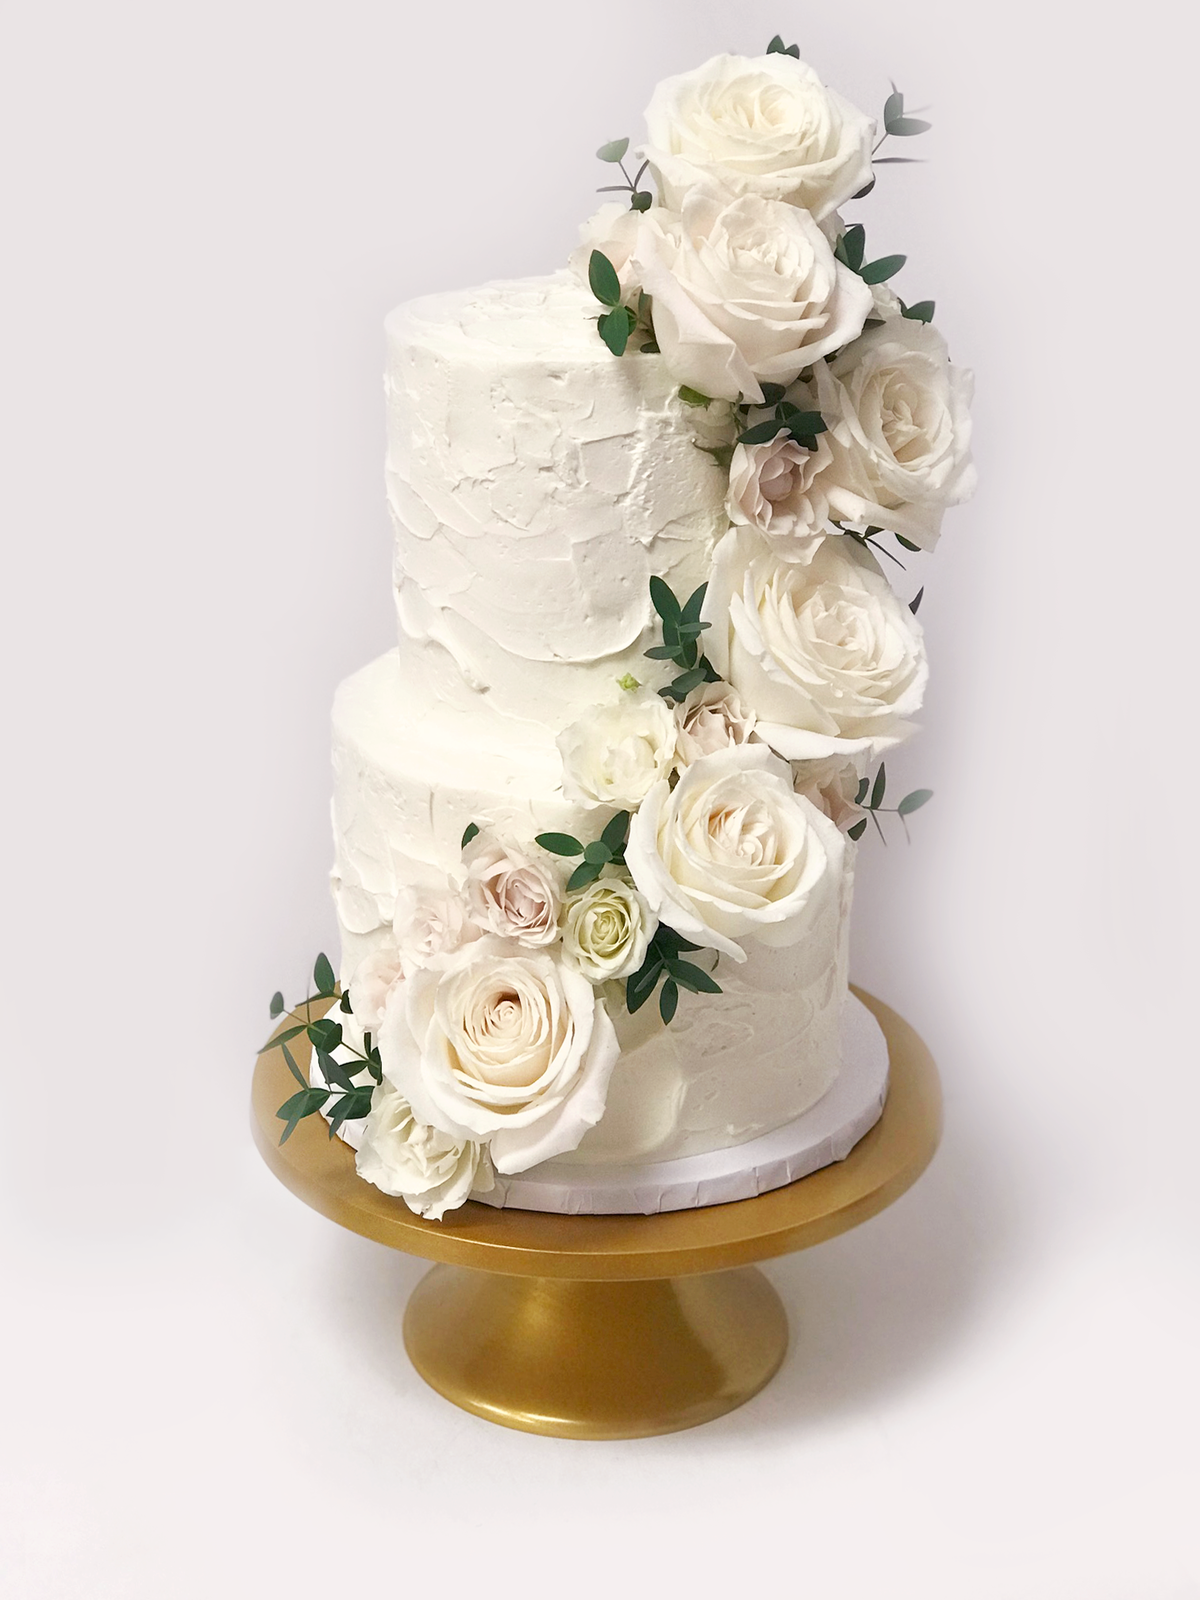 Whippt Wedding cake - Aug 2018 Julianne Young, Magnolia banquet, fleurish